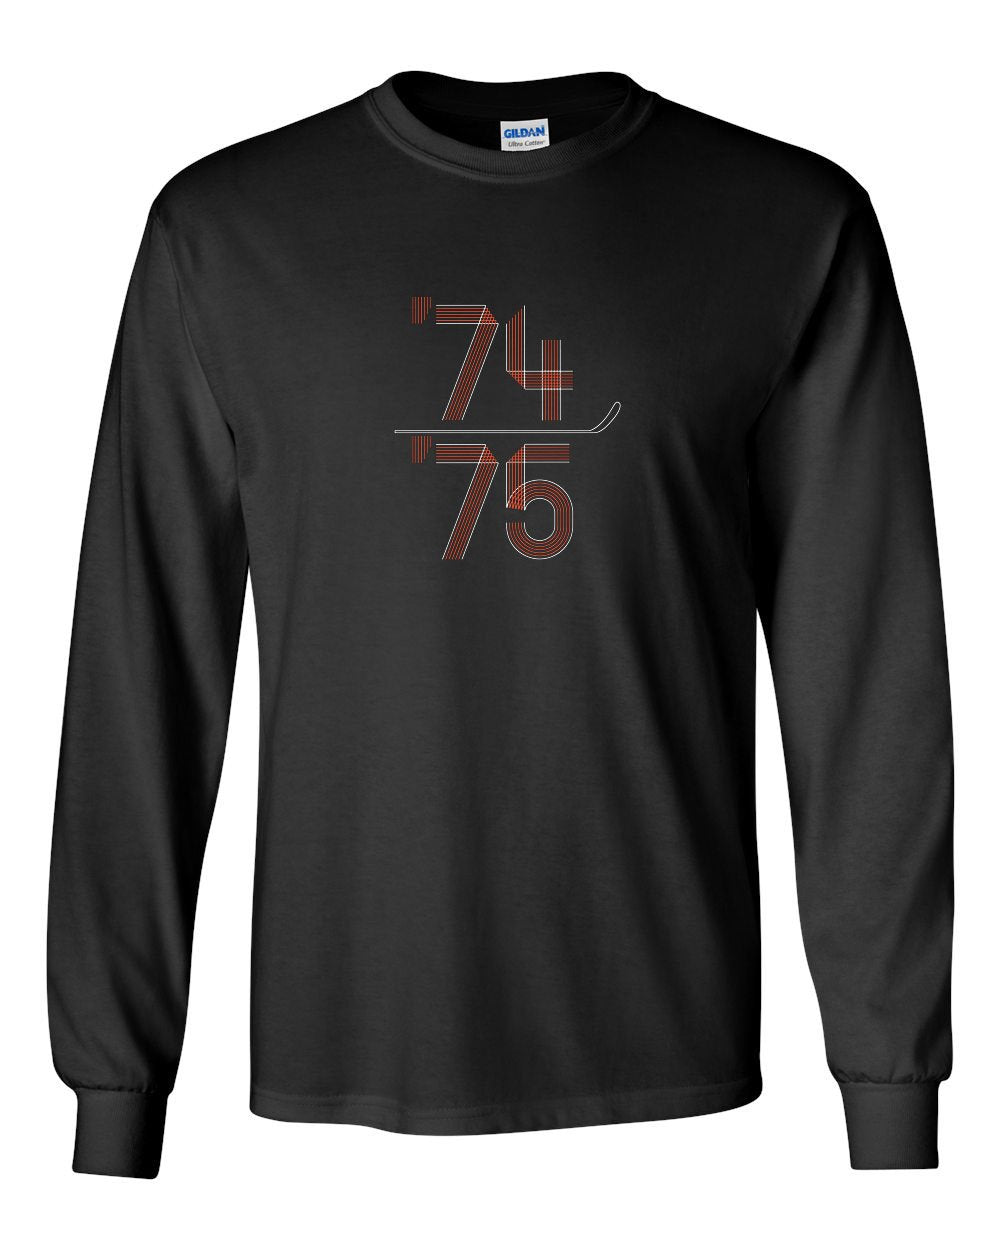 74-75 MENS Long Sleeve Heavy Cotton T-Shirt